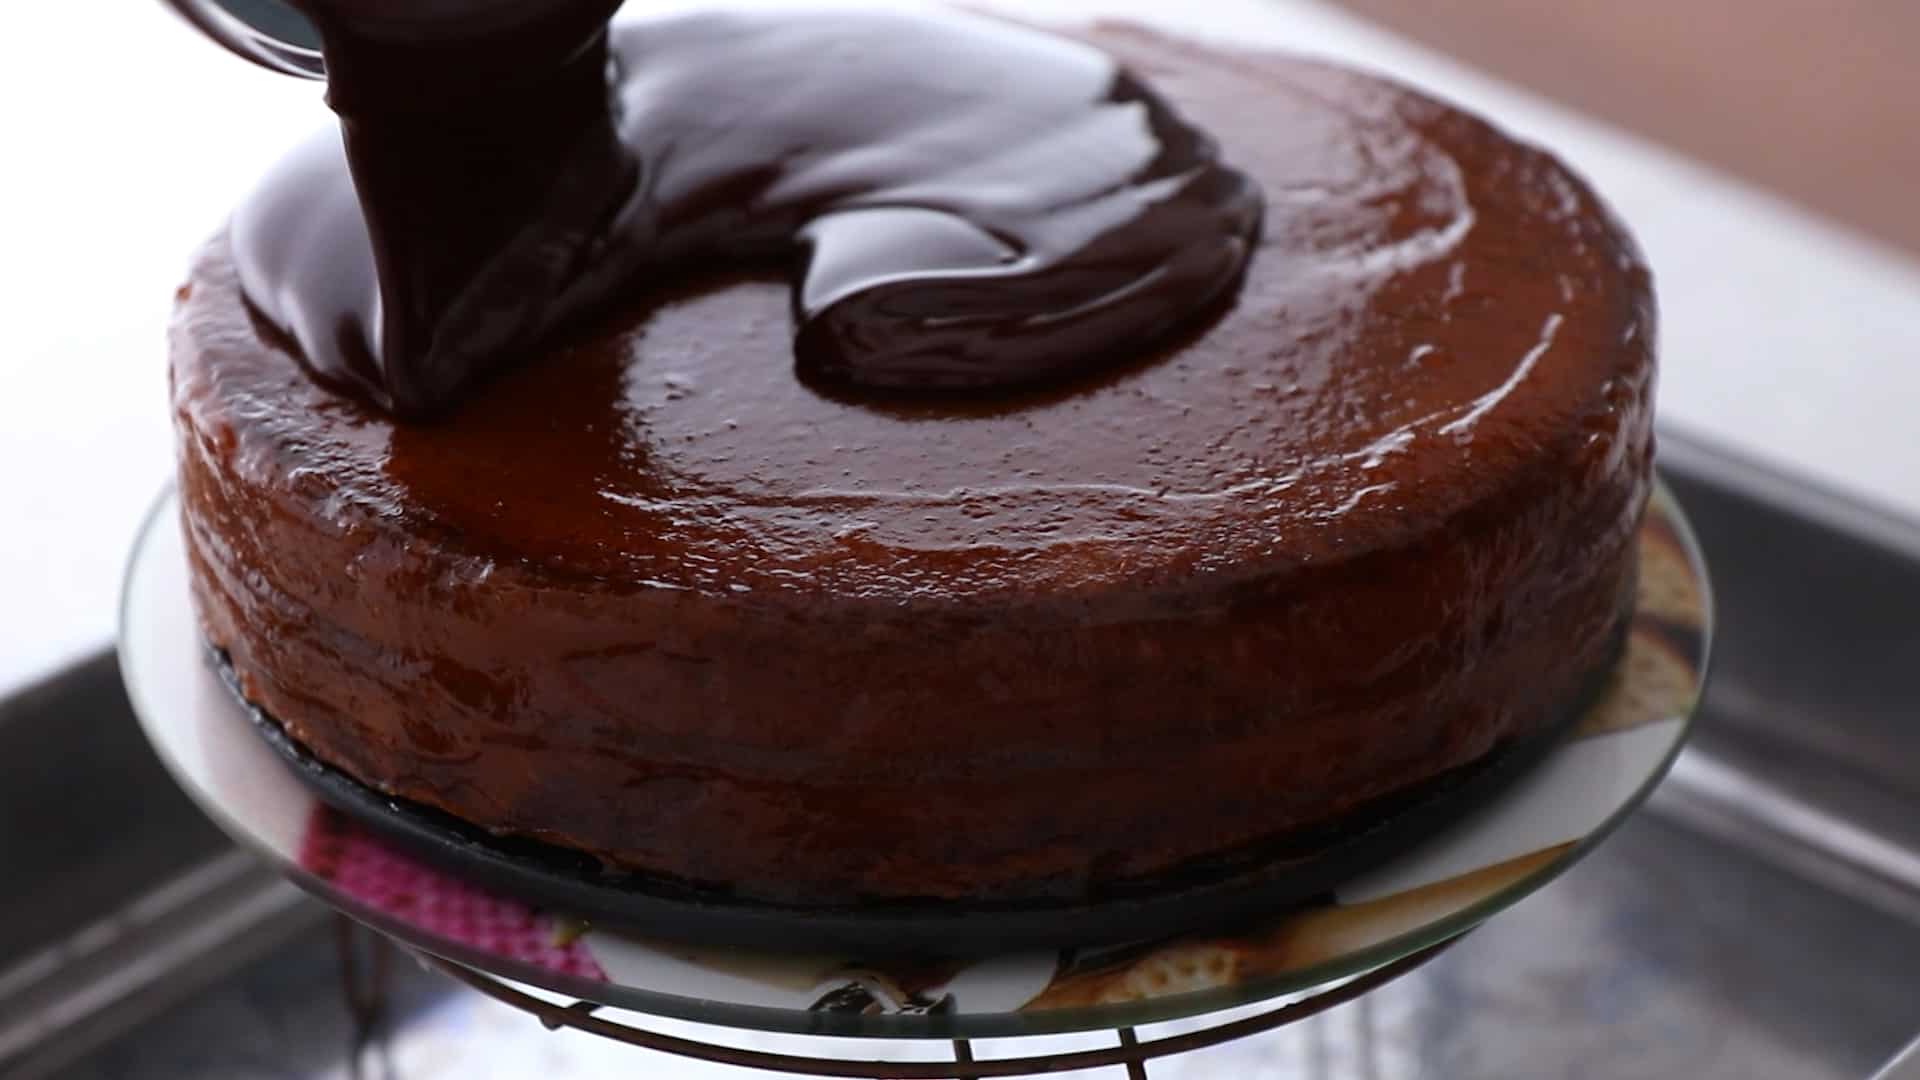 Pouring chocolate glaze over the chocolate cake